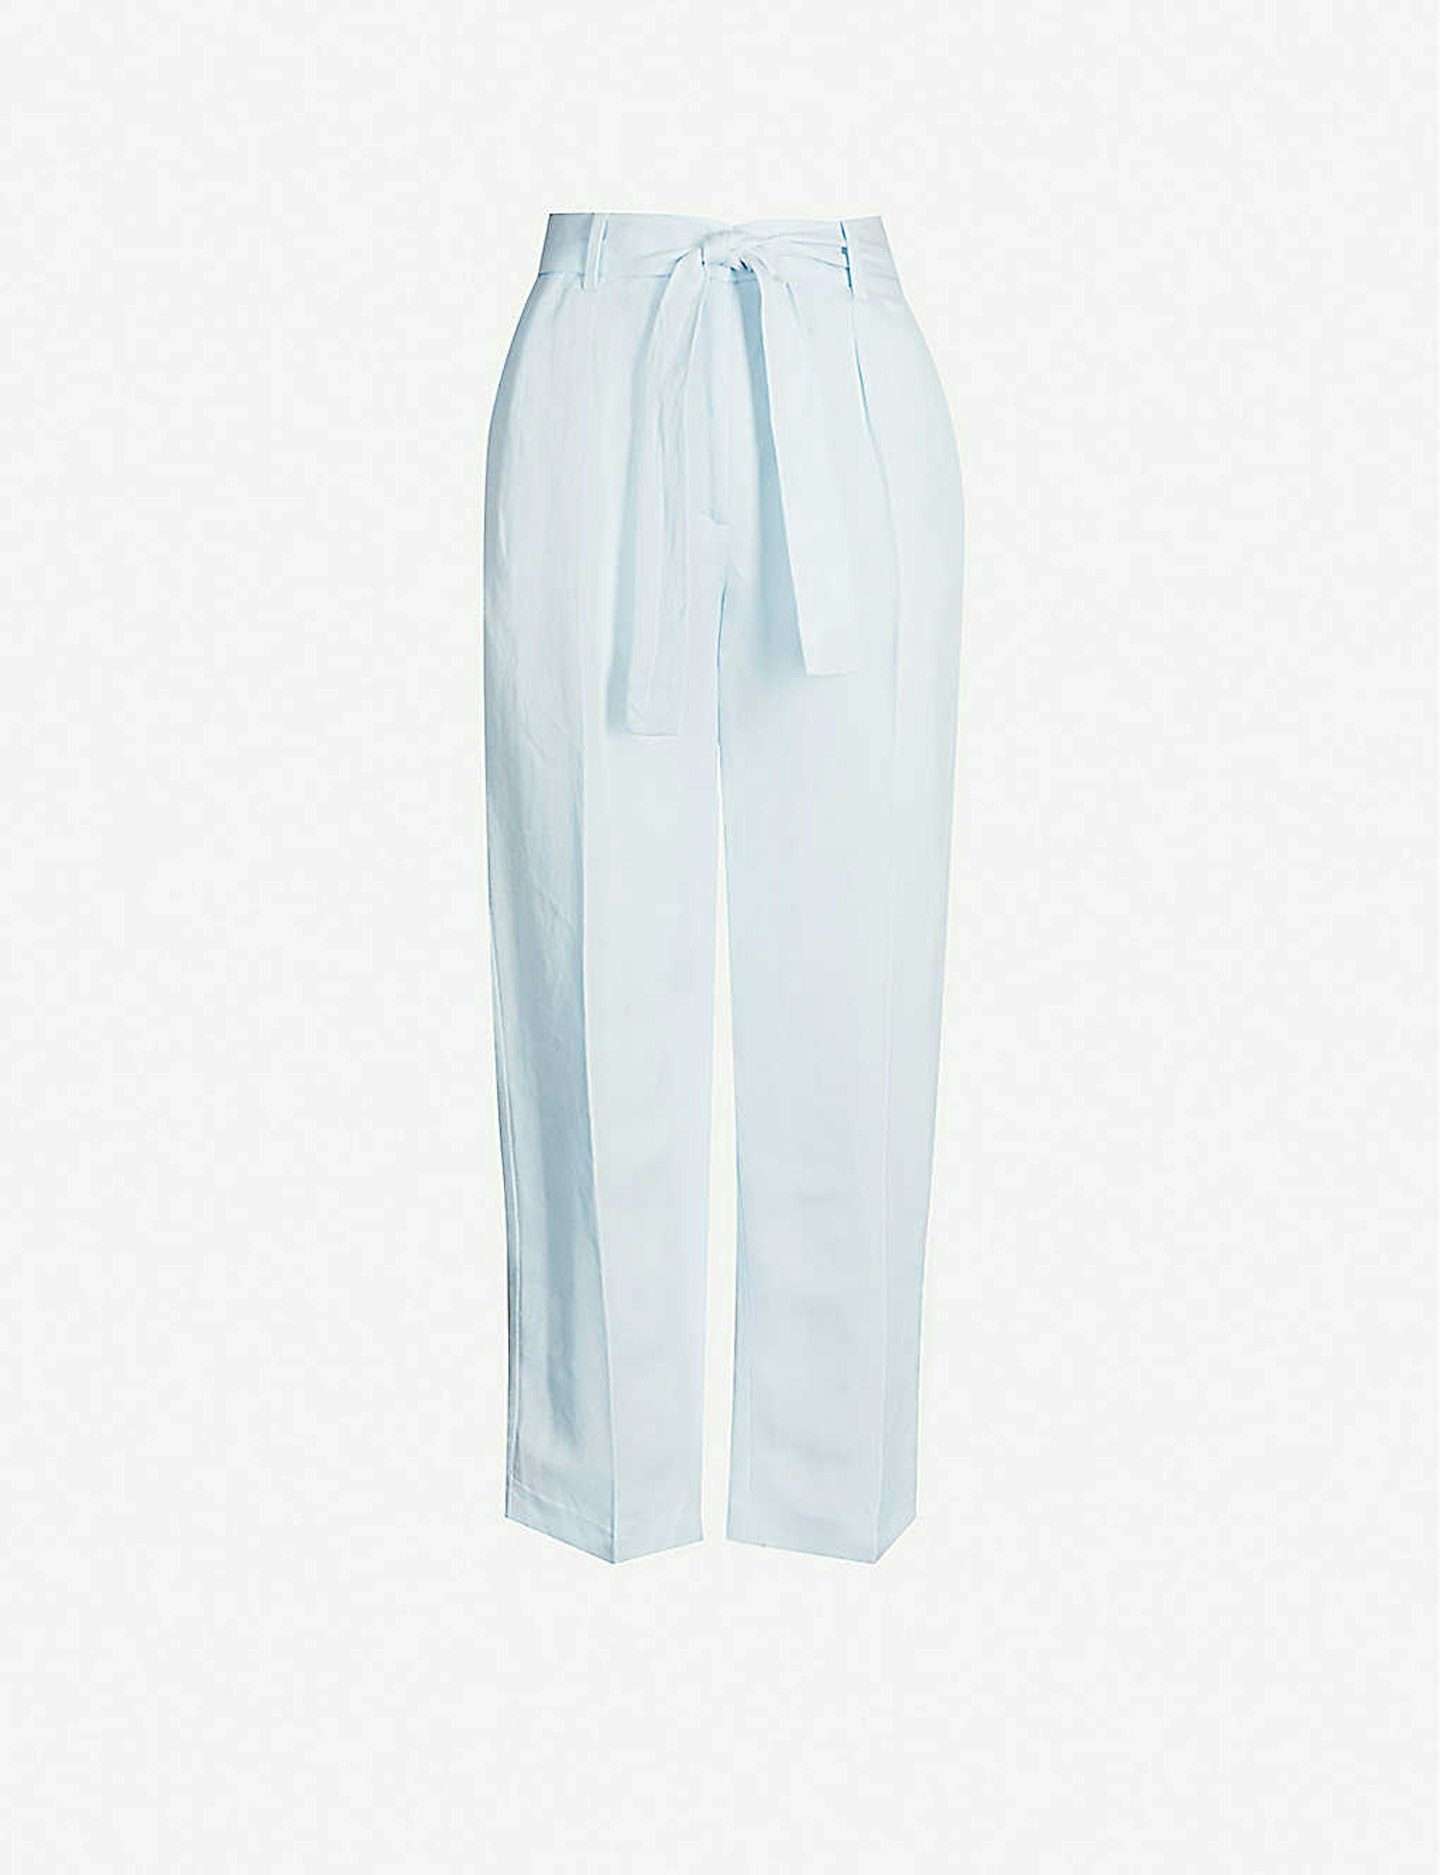 Maje, Pleated Blue Trousers, £146.30